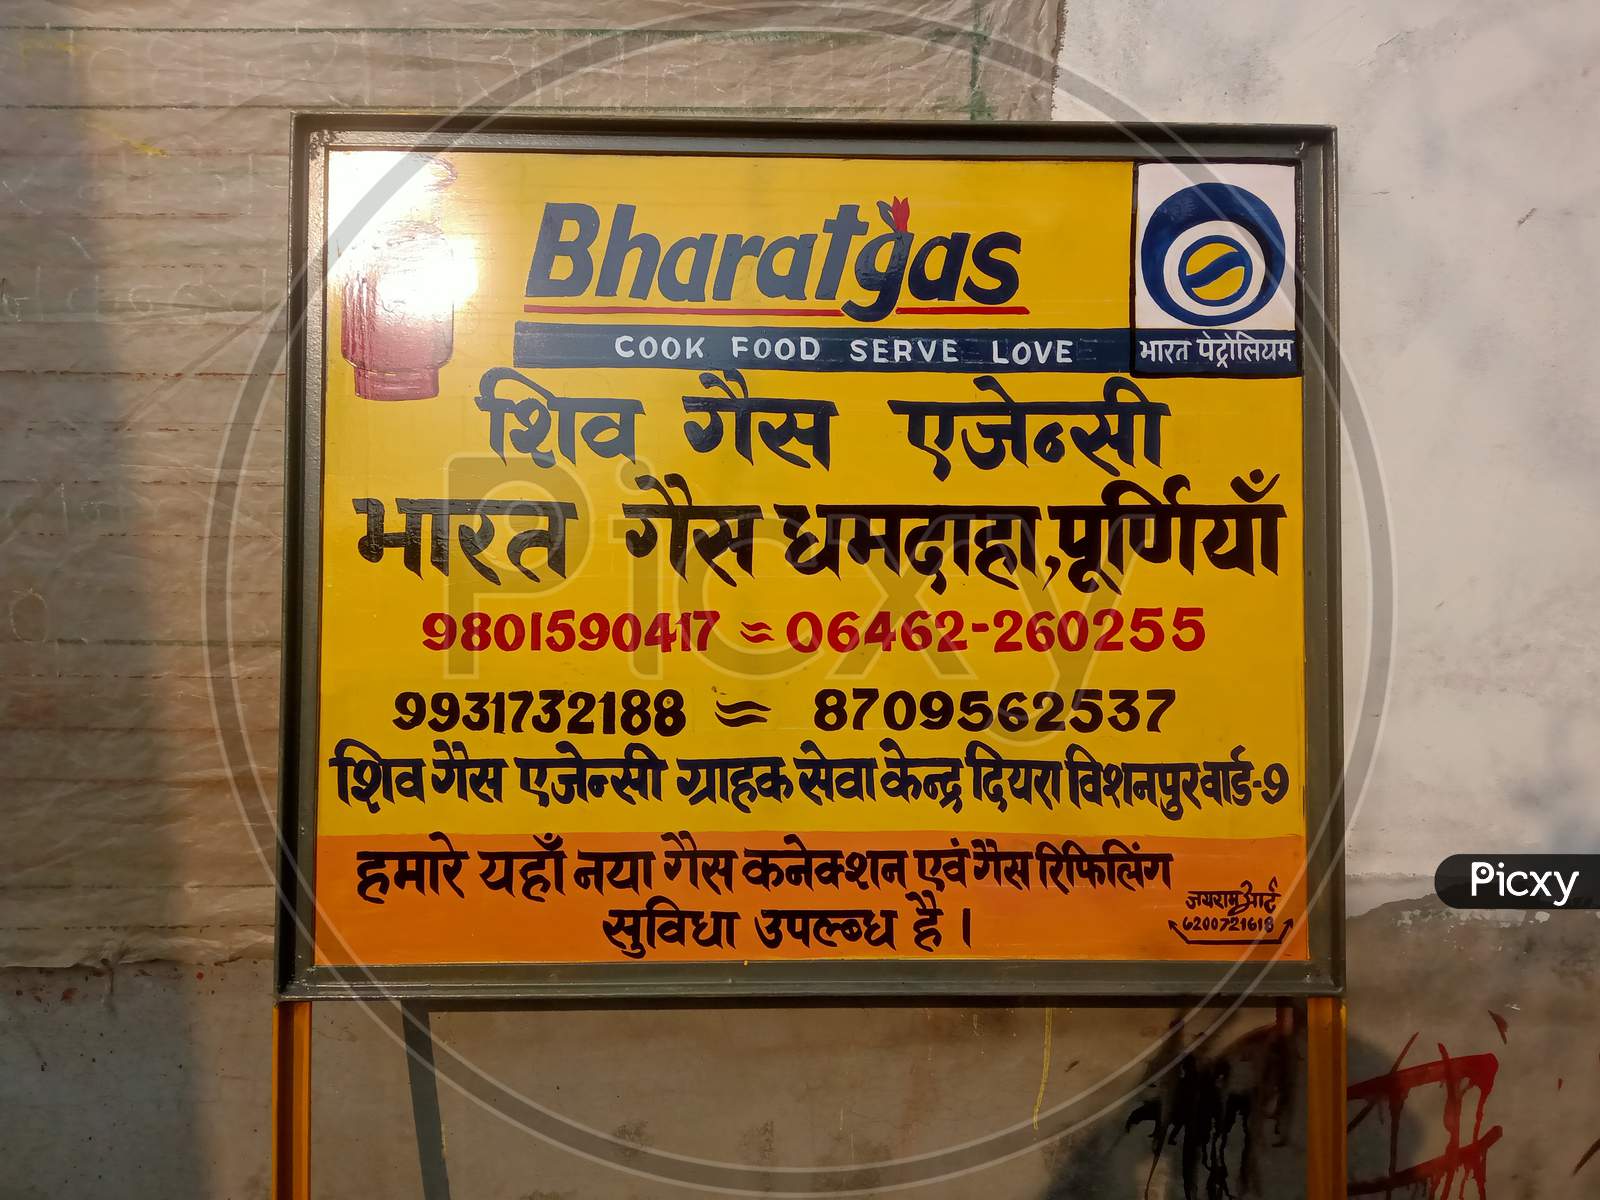 Bharat gas sign board